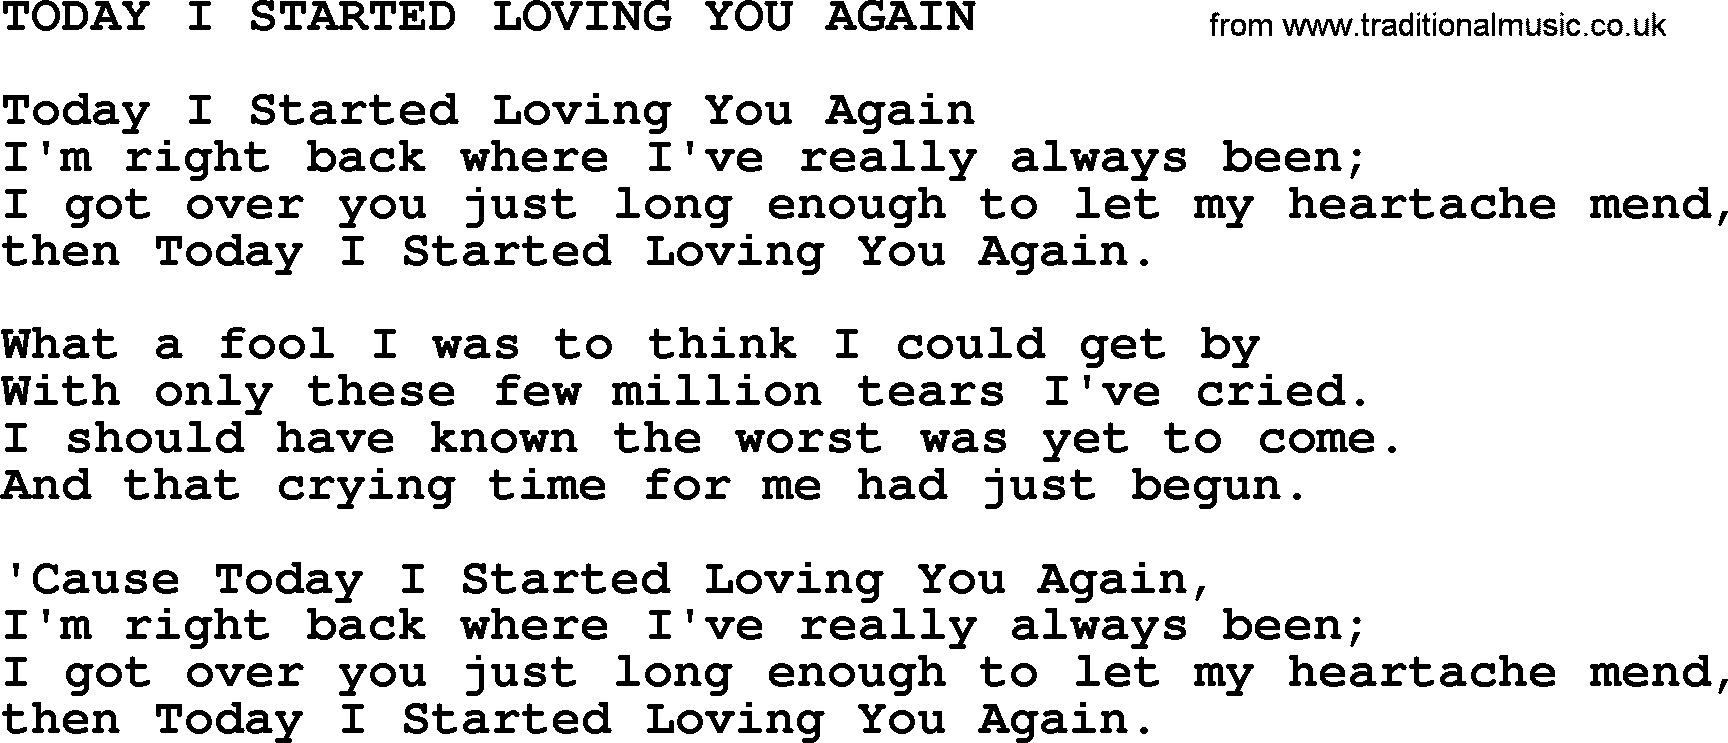 Merle Haggard song: Today I Started Loving You Again, lyrics.